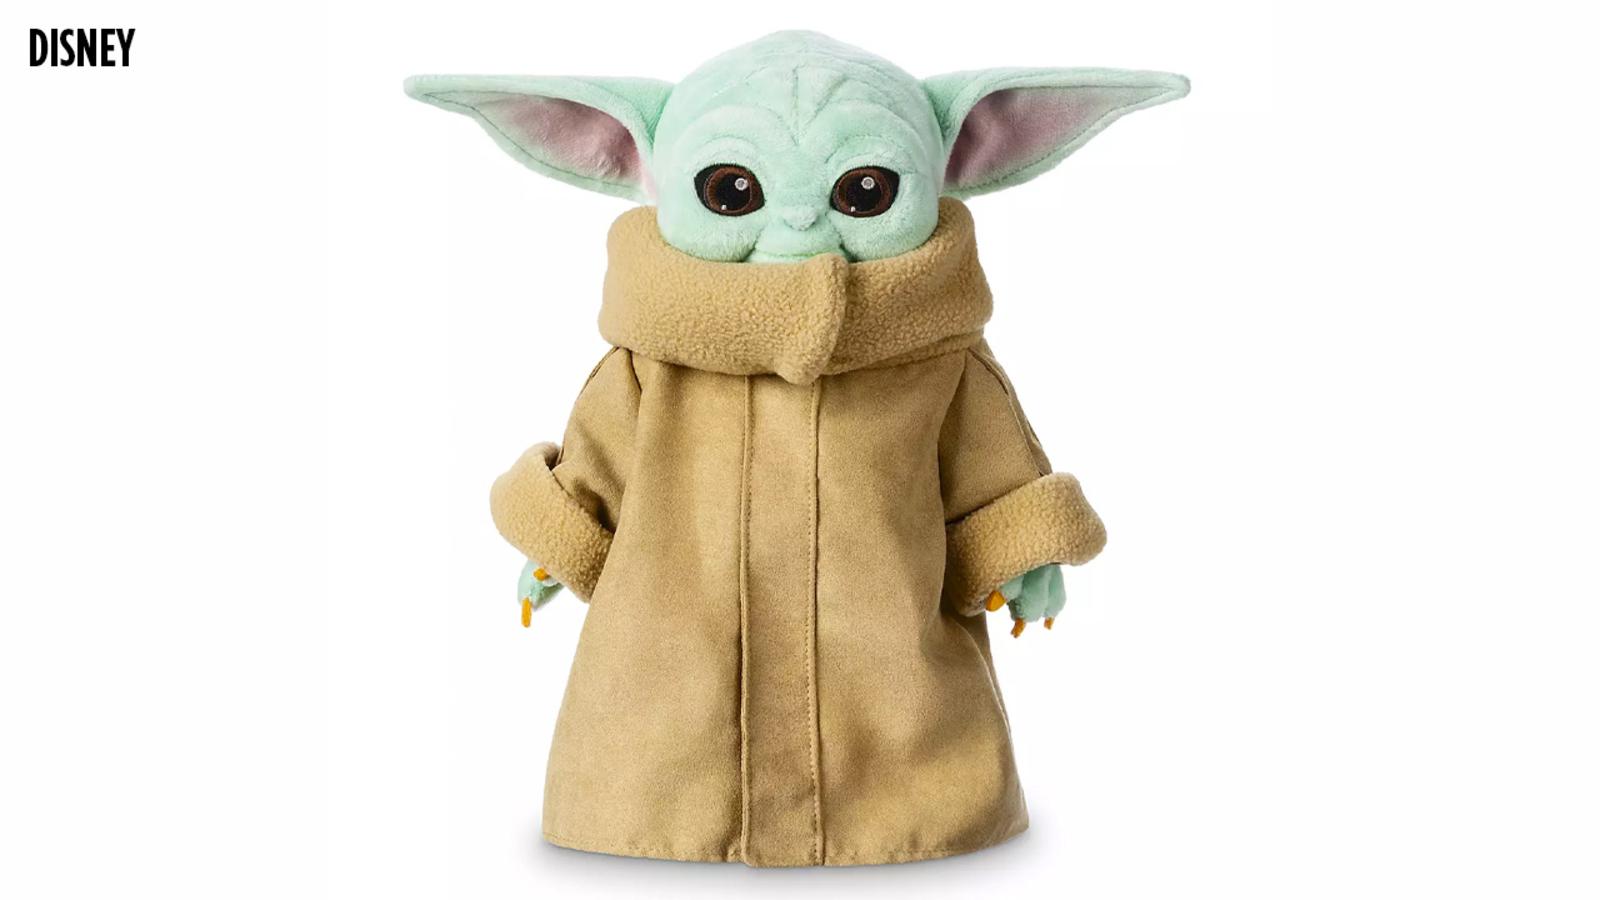 Baby Yoda toys: How to preorder plush toys, bobbleheads on shopDisney.com